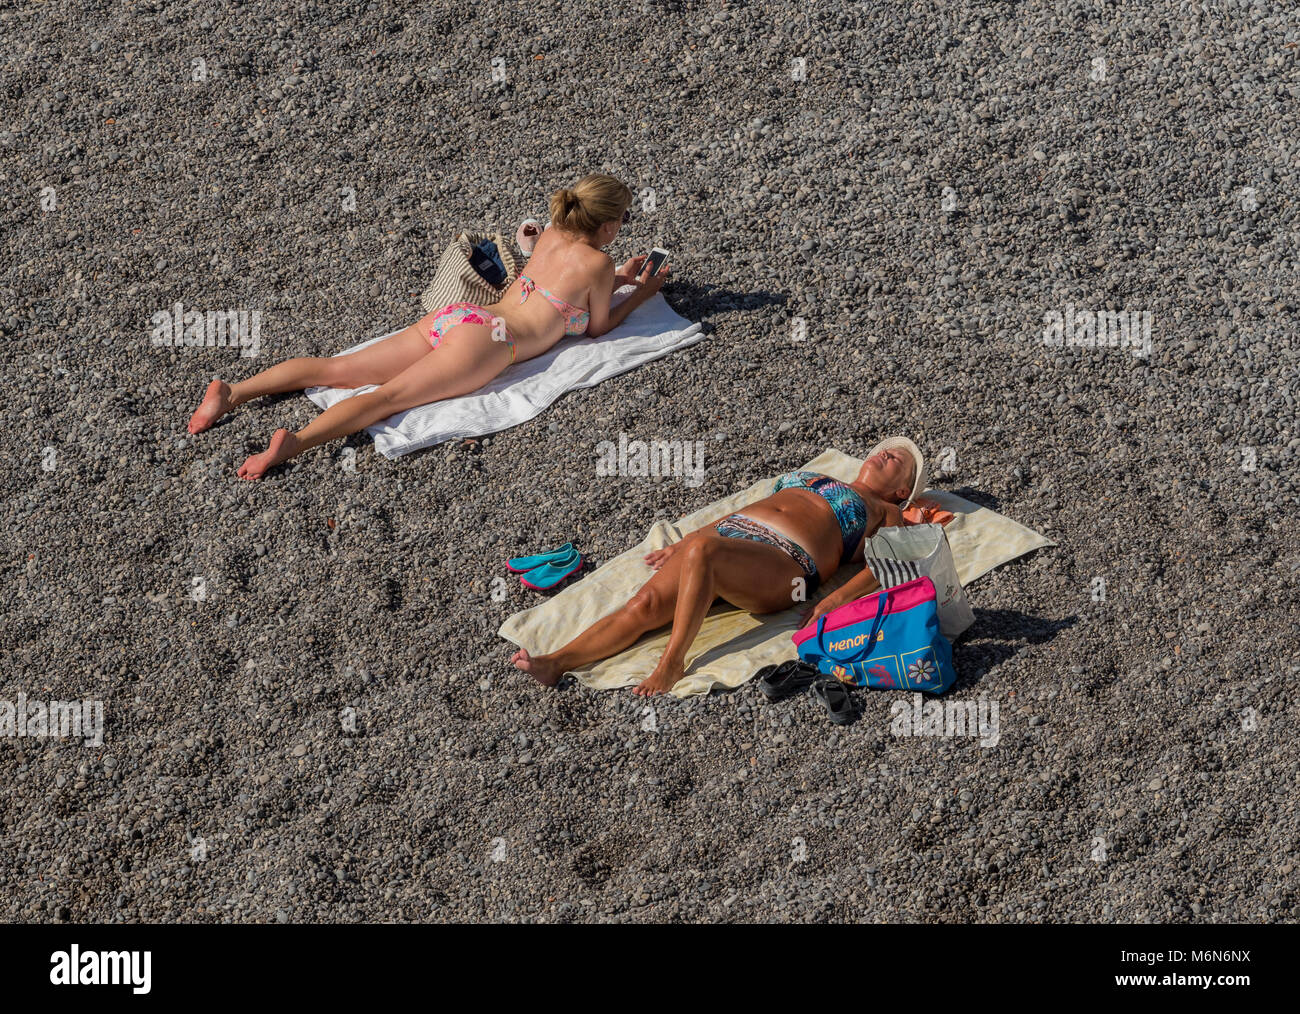 voyeur beach girls sunbathing